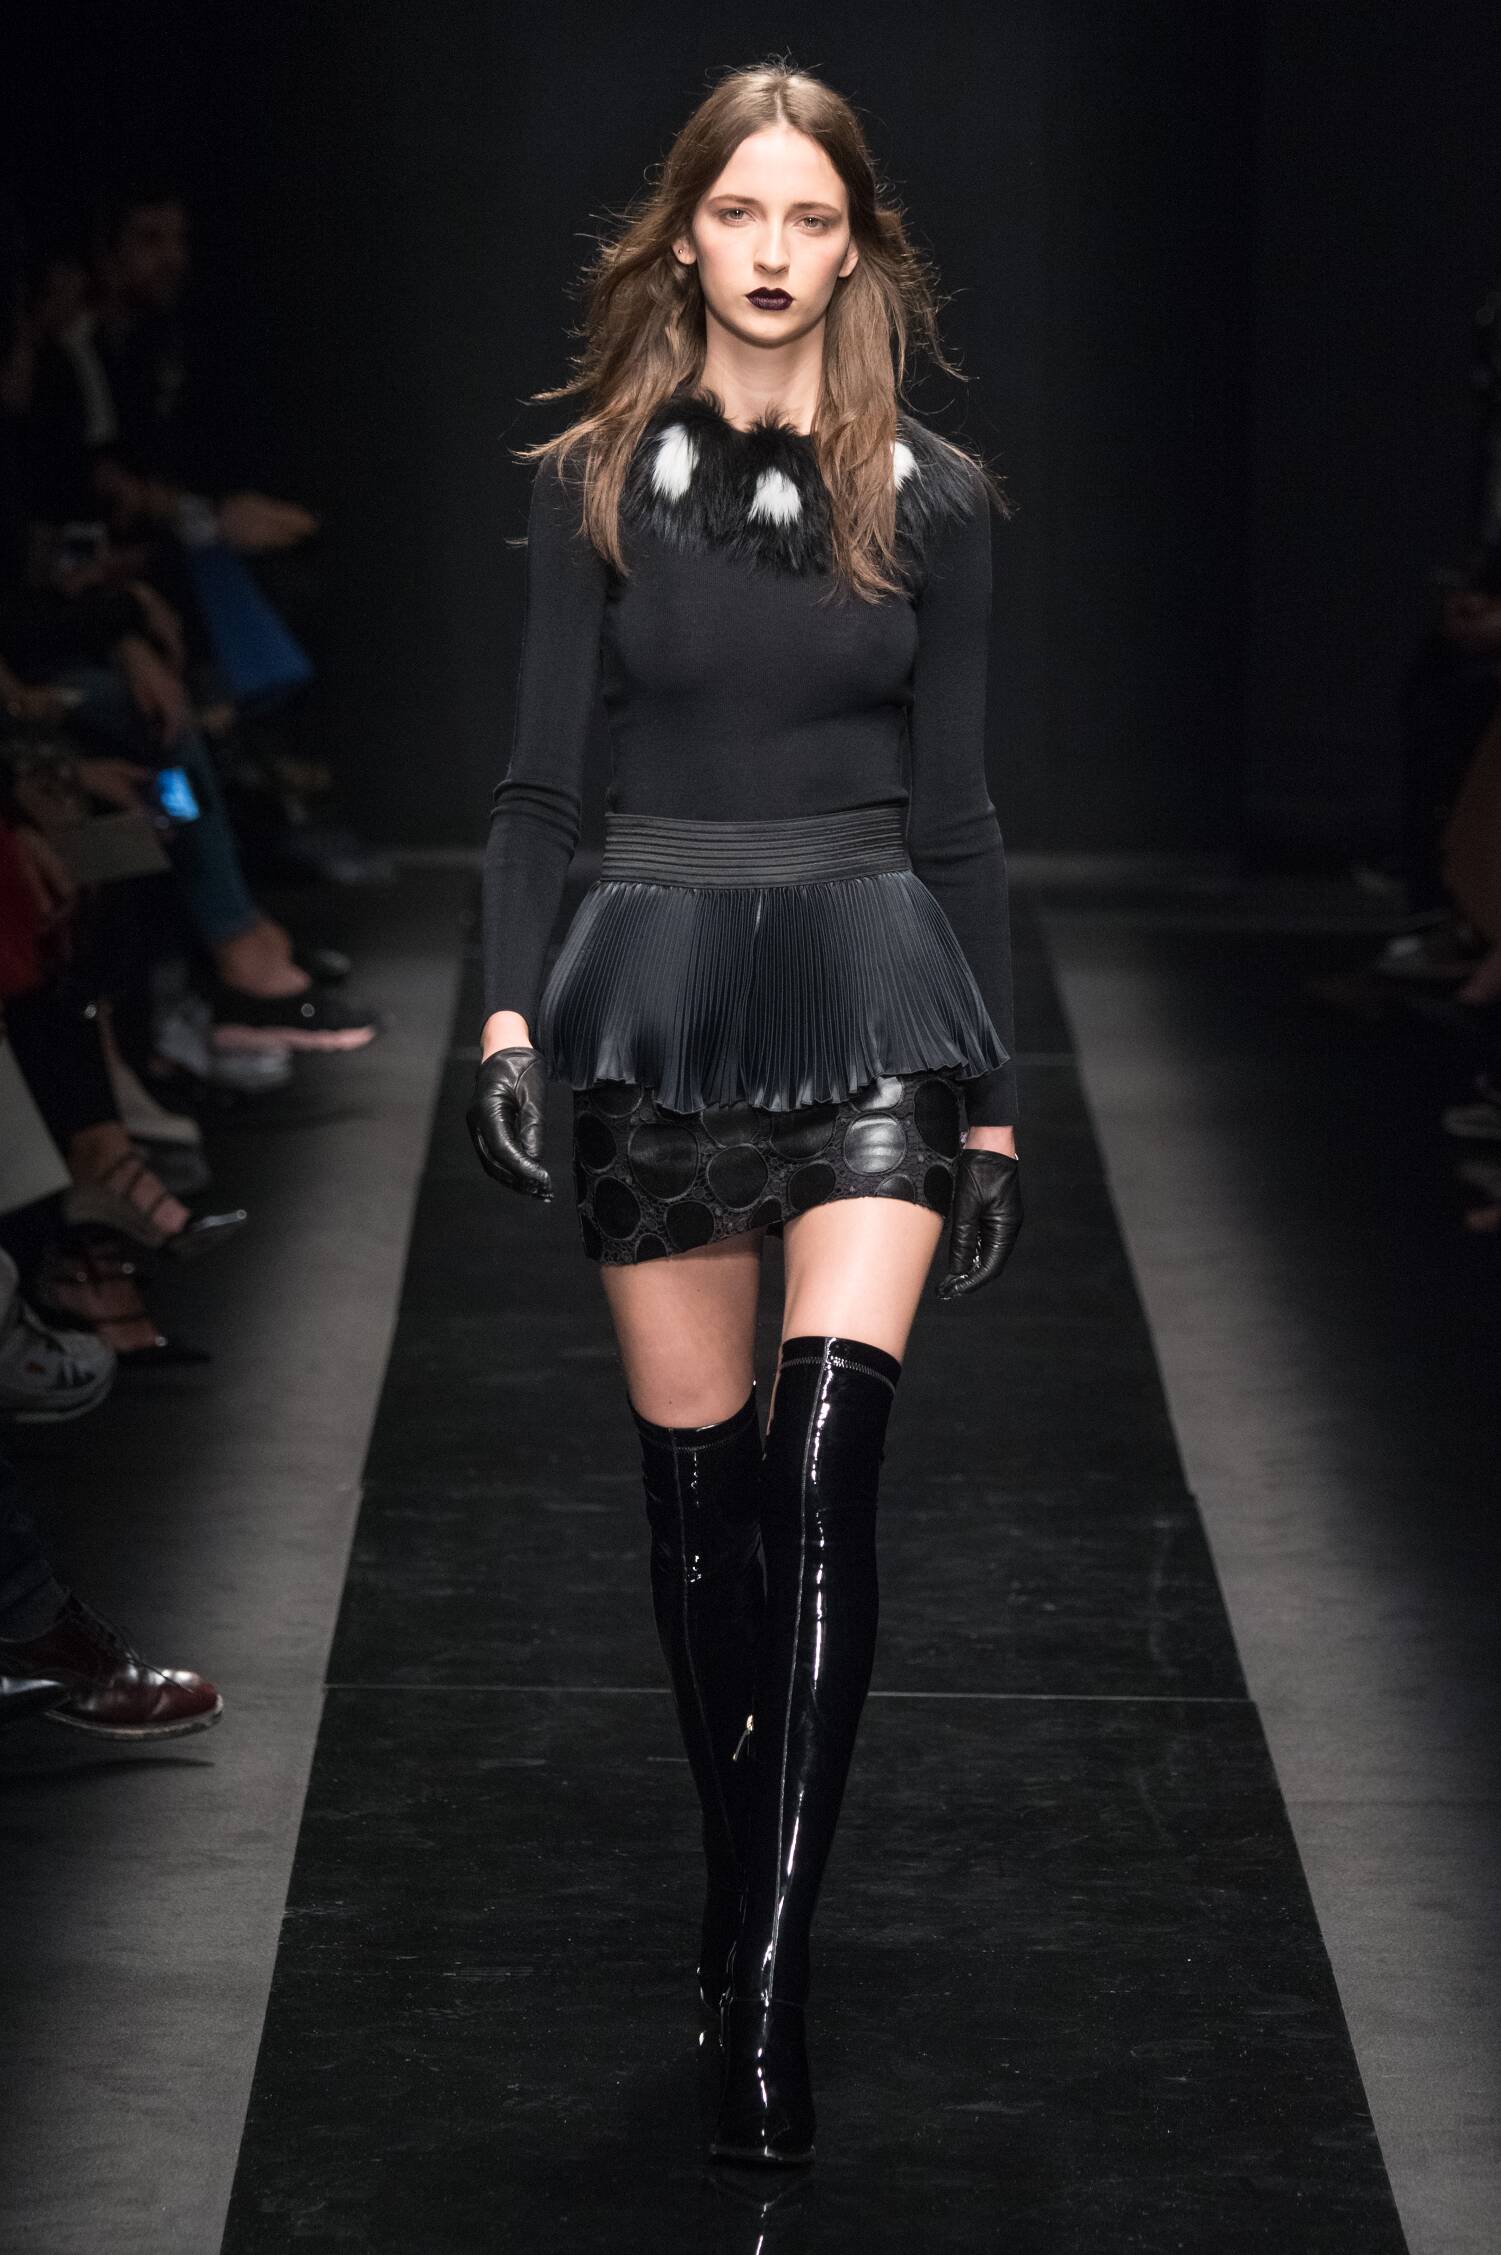 2015 Fashion Woman Model Emanuel Ungaro Collection Catwalk